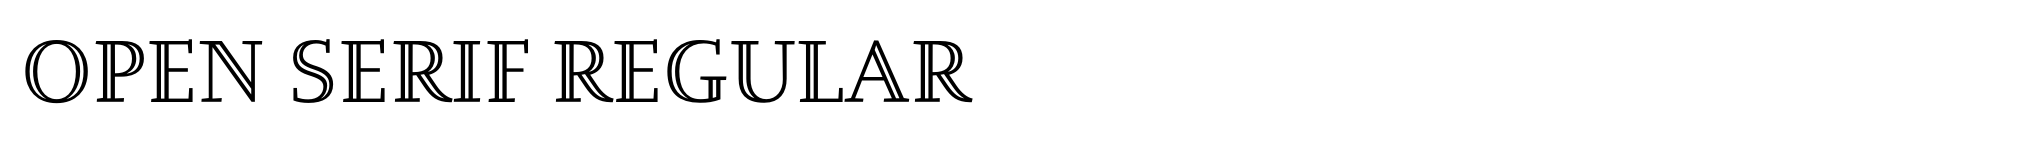 Open Serif Regular image